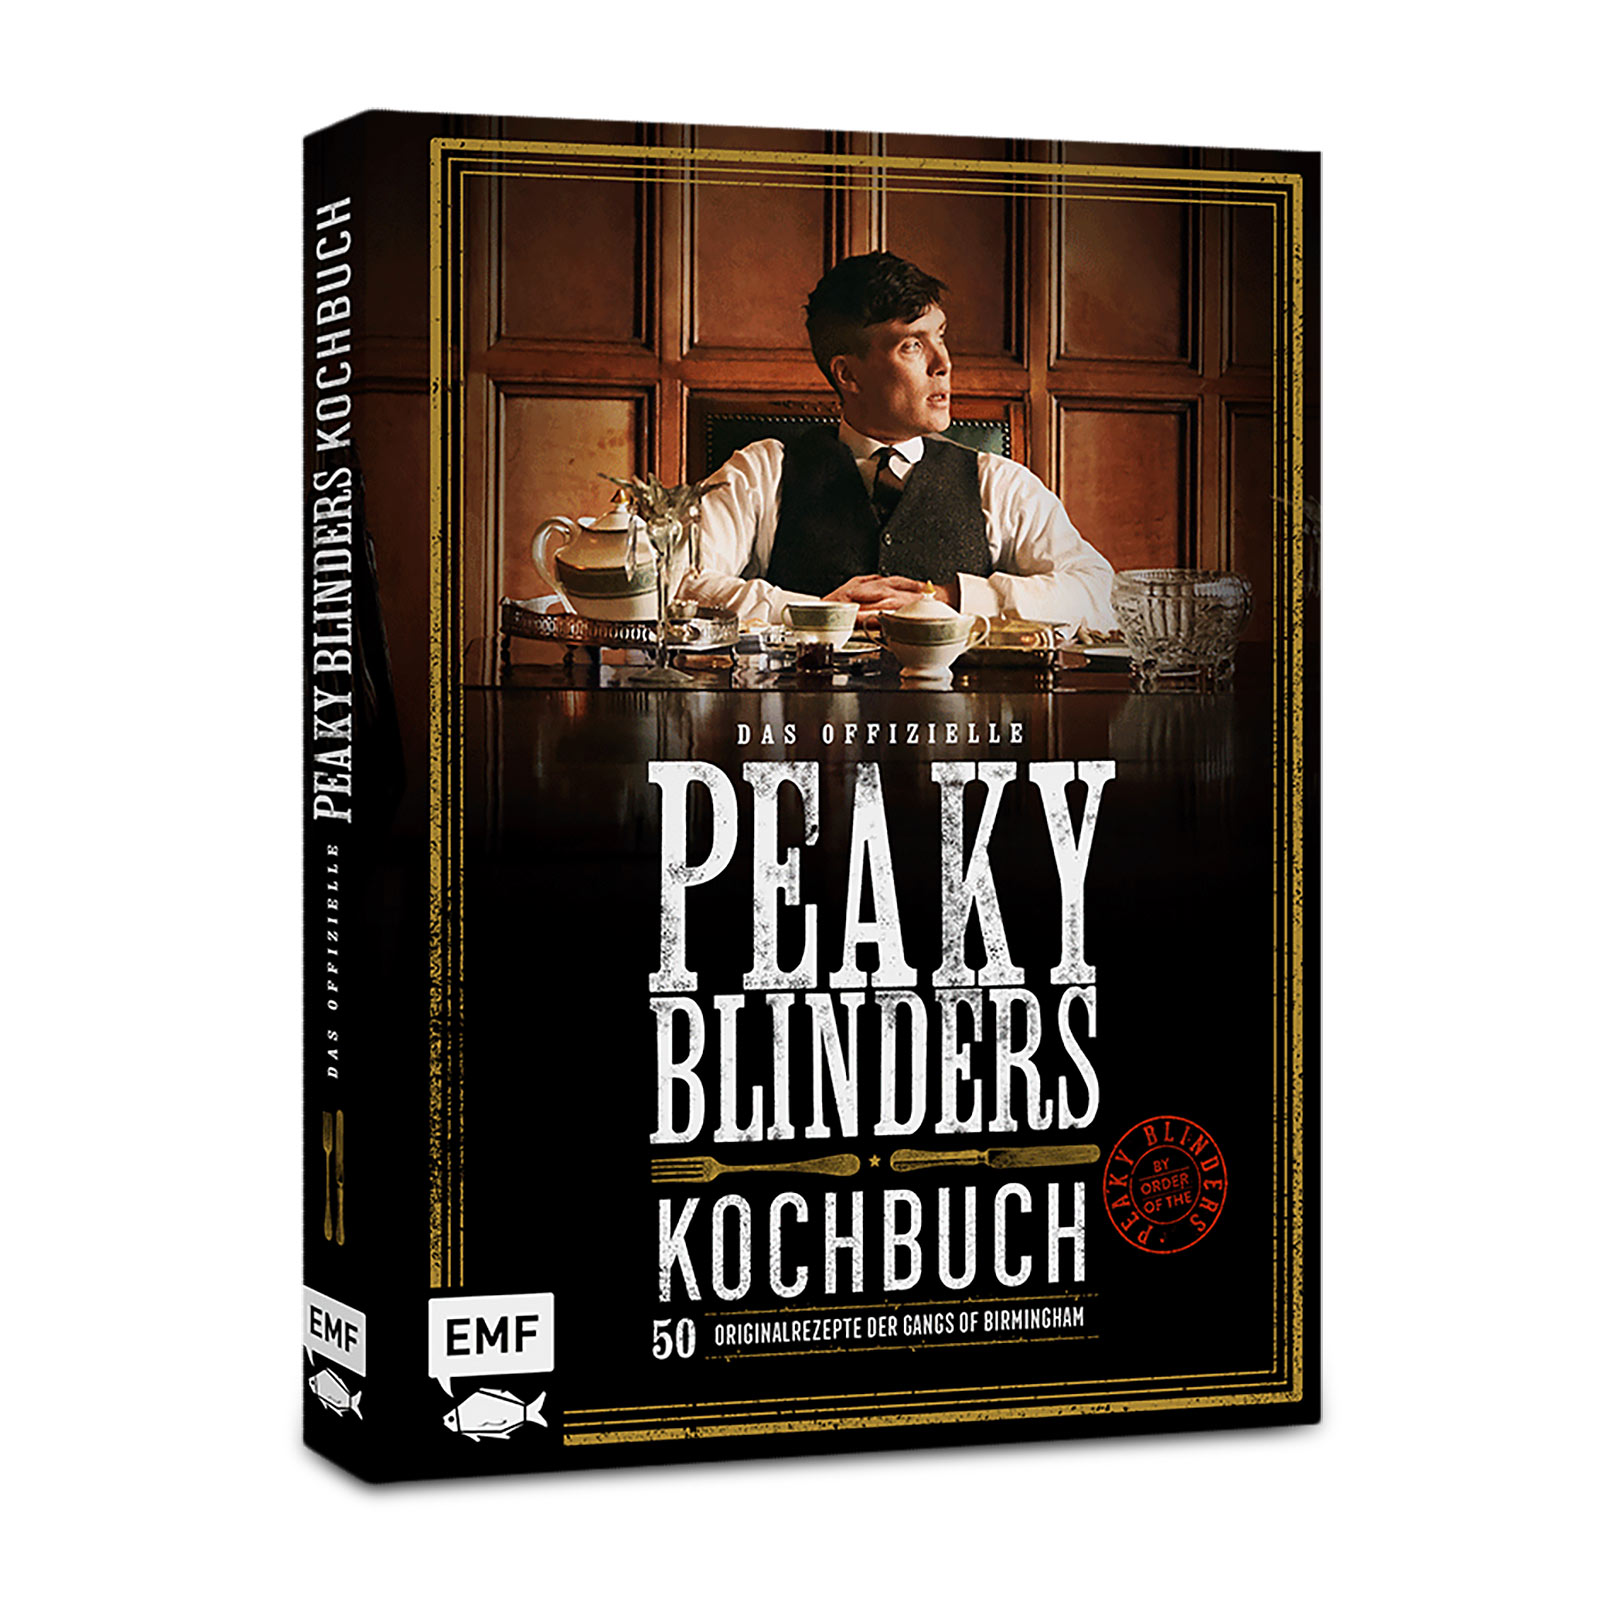 The official Peaky Blinders cookbook